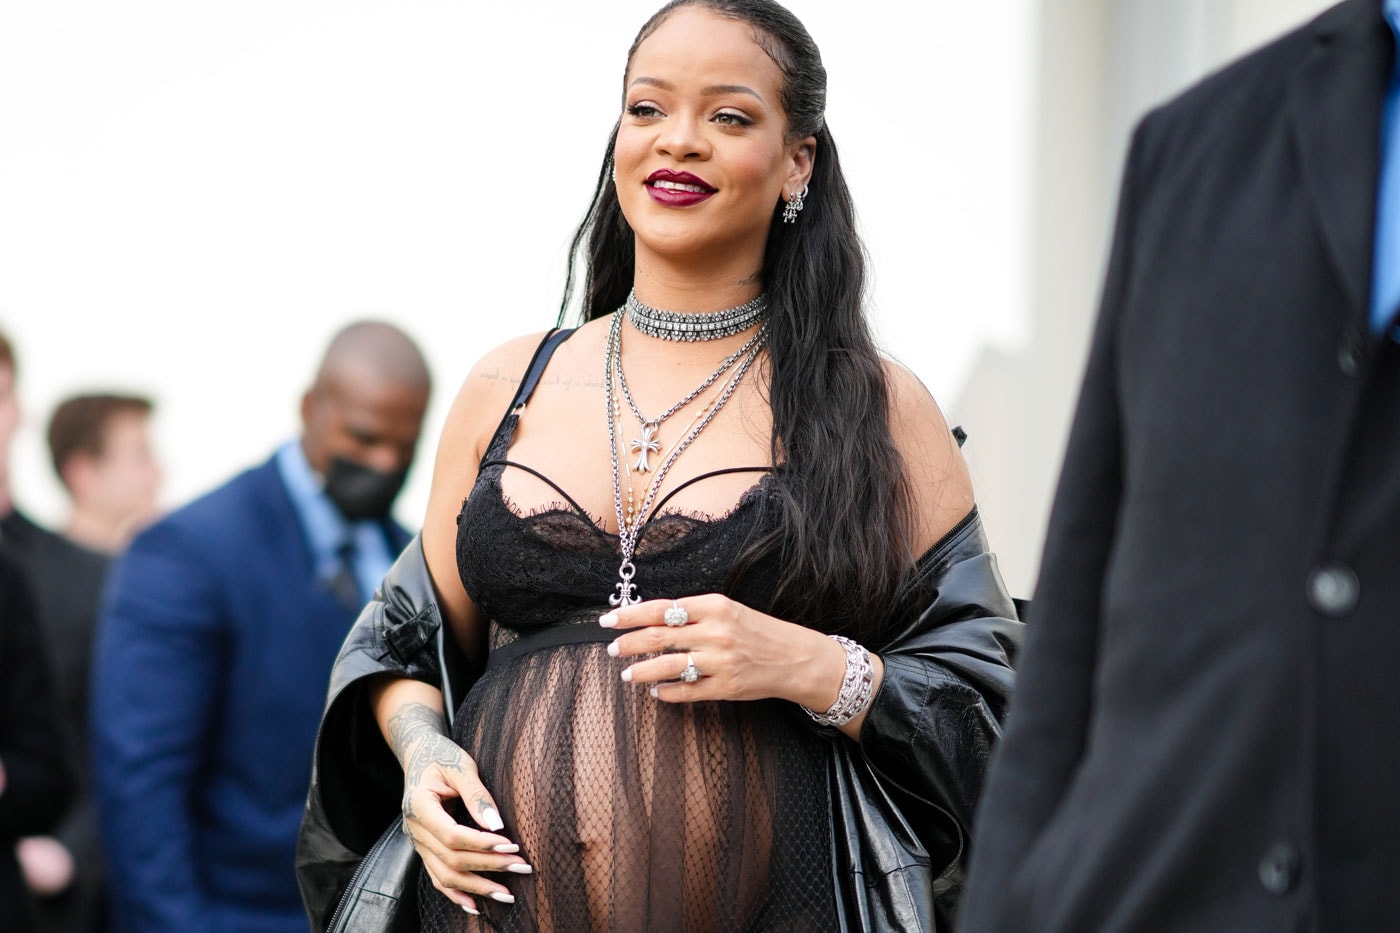 Rihanna's Savage x Fenty Lingerie Company Plans for $3 Billion USD IPO blooberg fashion brand forbes amazon prime video diversity billionaires female entrepreneurs 